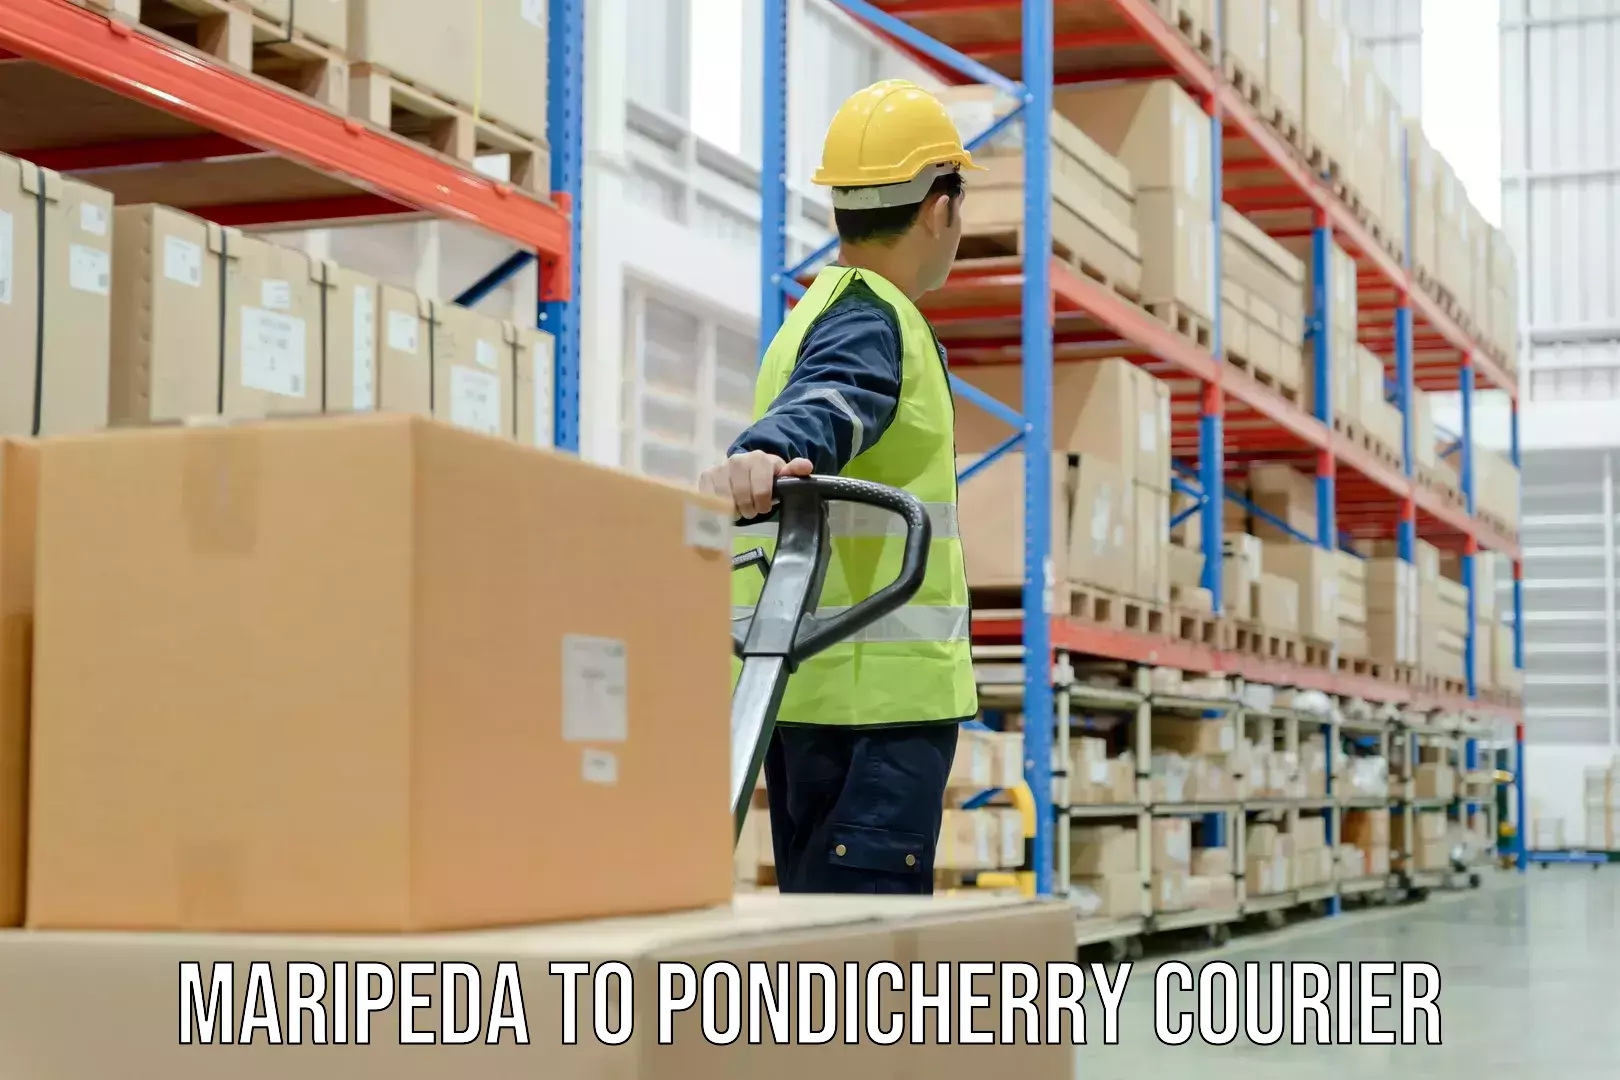 Professional courier handling Maripeda to Pondicherry